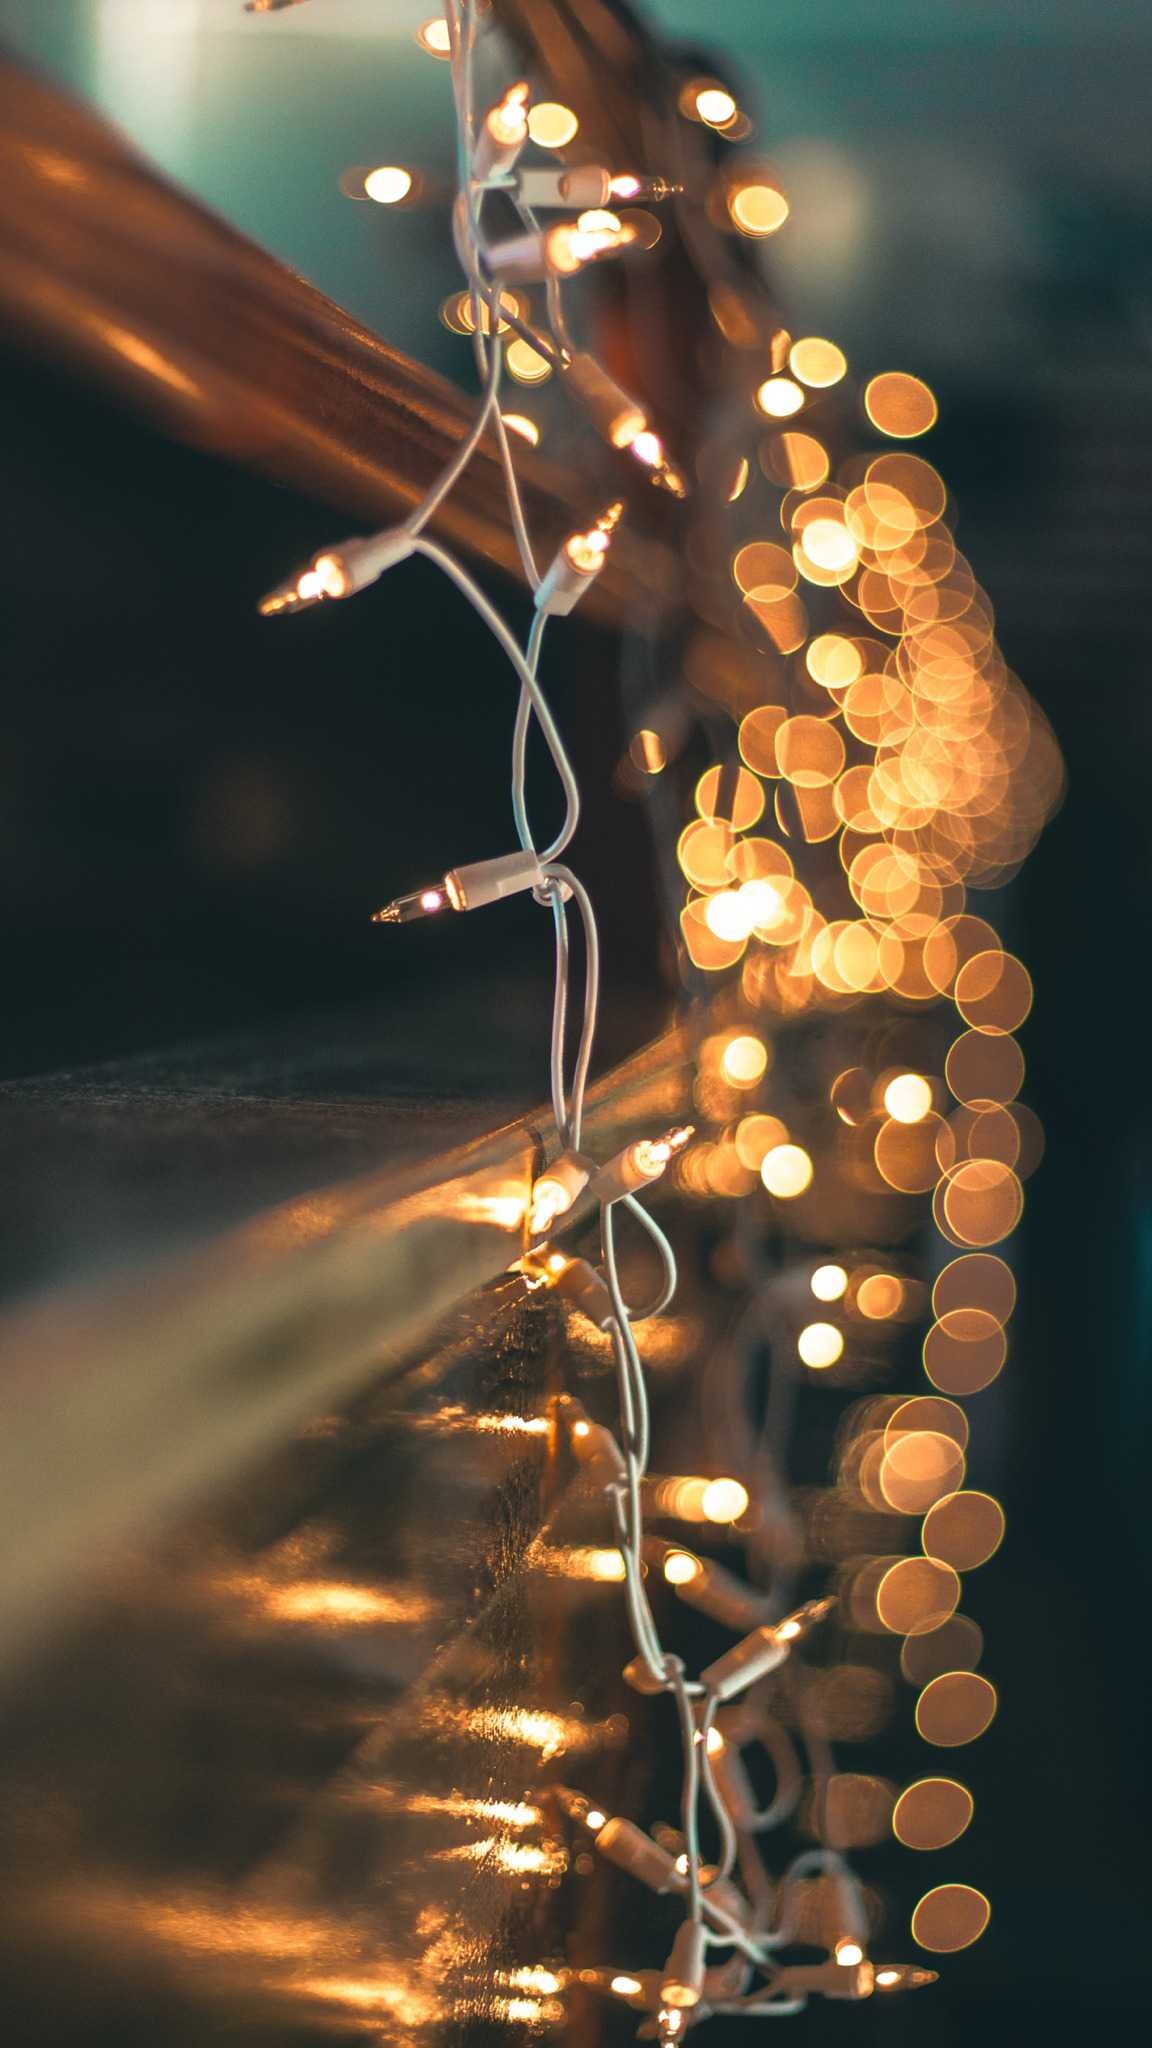 Gold Lights: Hanging Christmas lights, Festive room decoration, Bokeh effect. 1160x2050 HD Wallpaper.